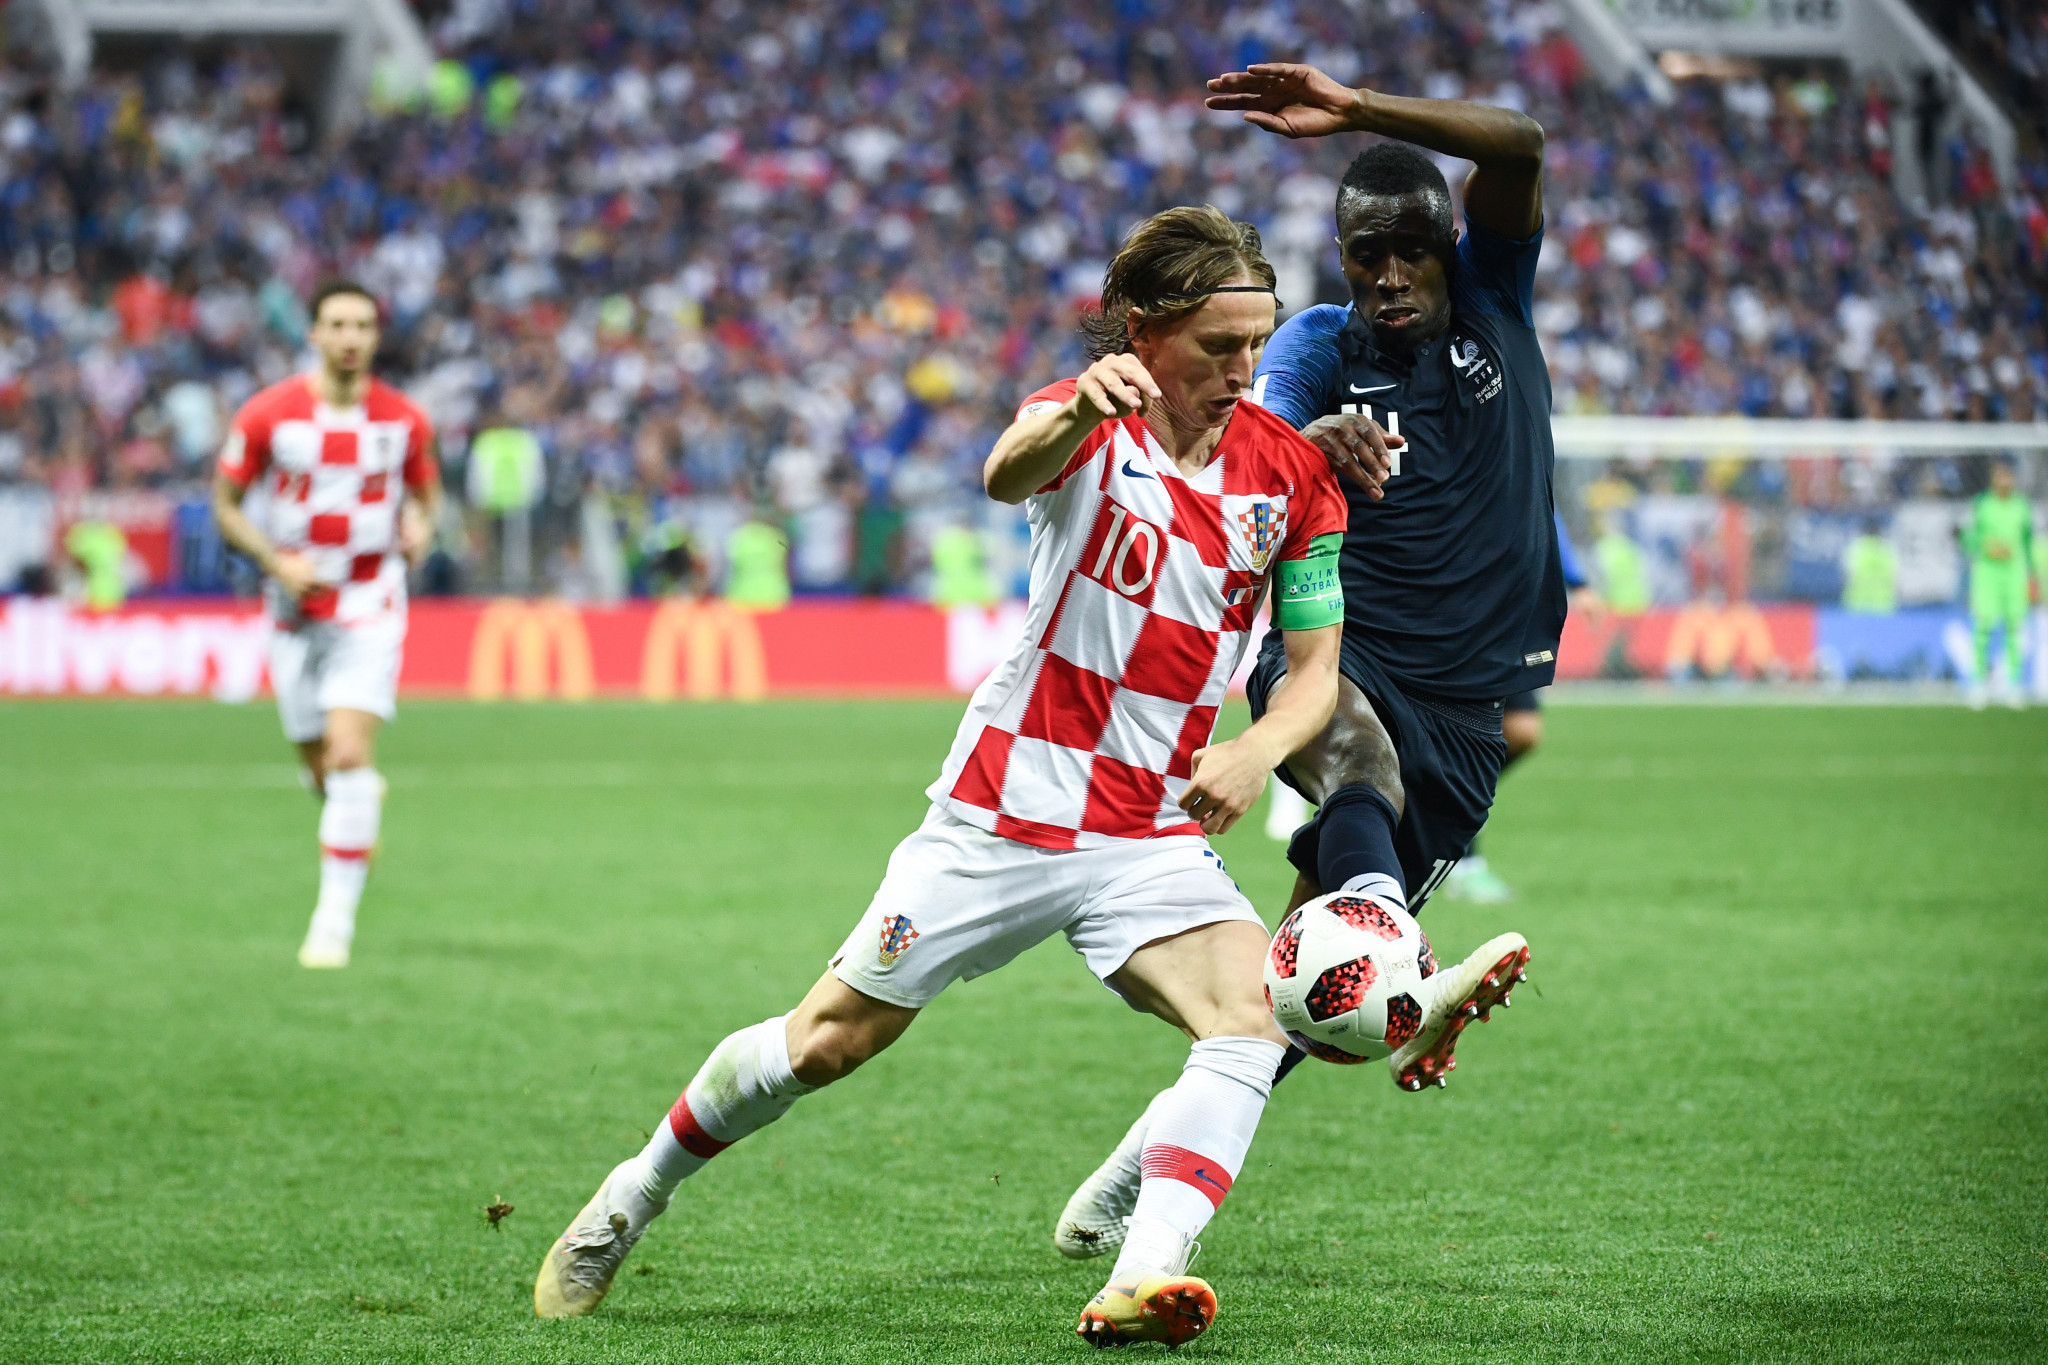 Croatia’s Luka Modrić was named the 2018 World Cup Golden Ball winner ©Getty Images